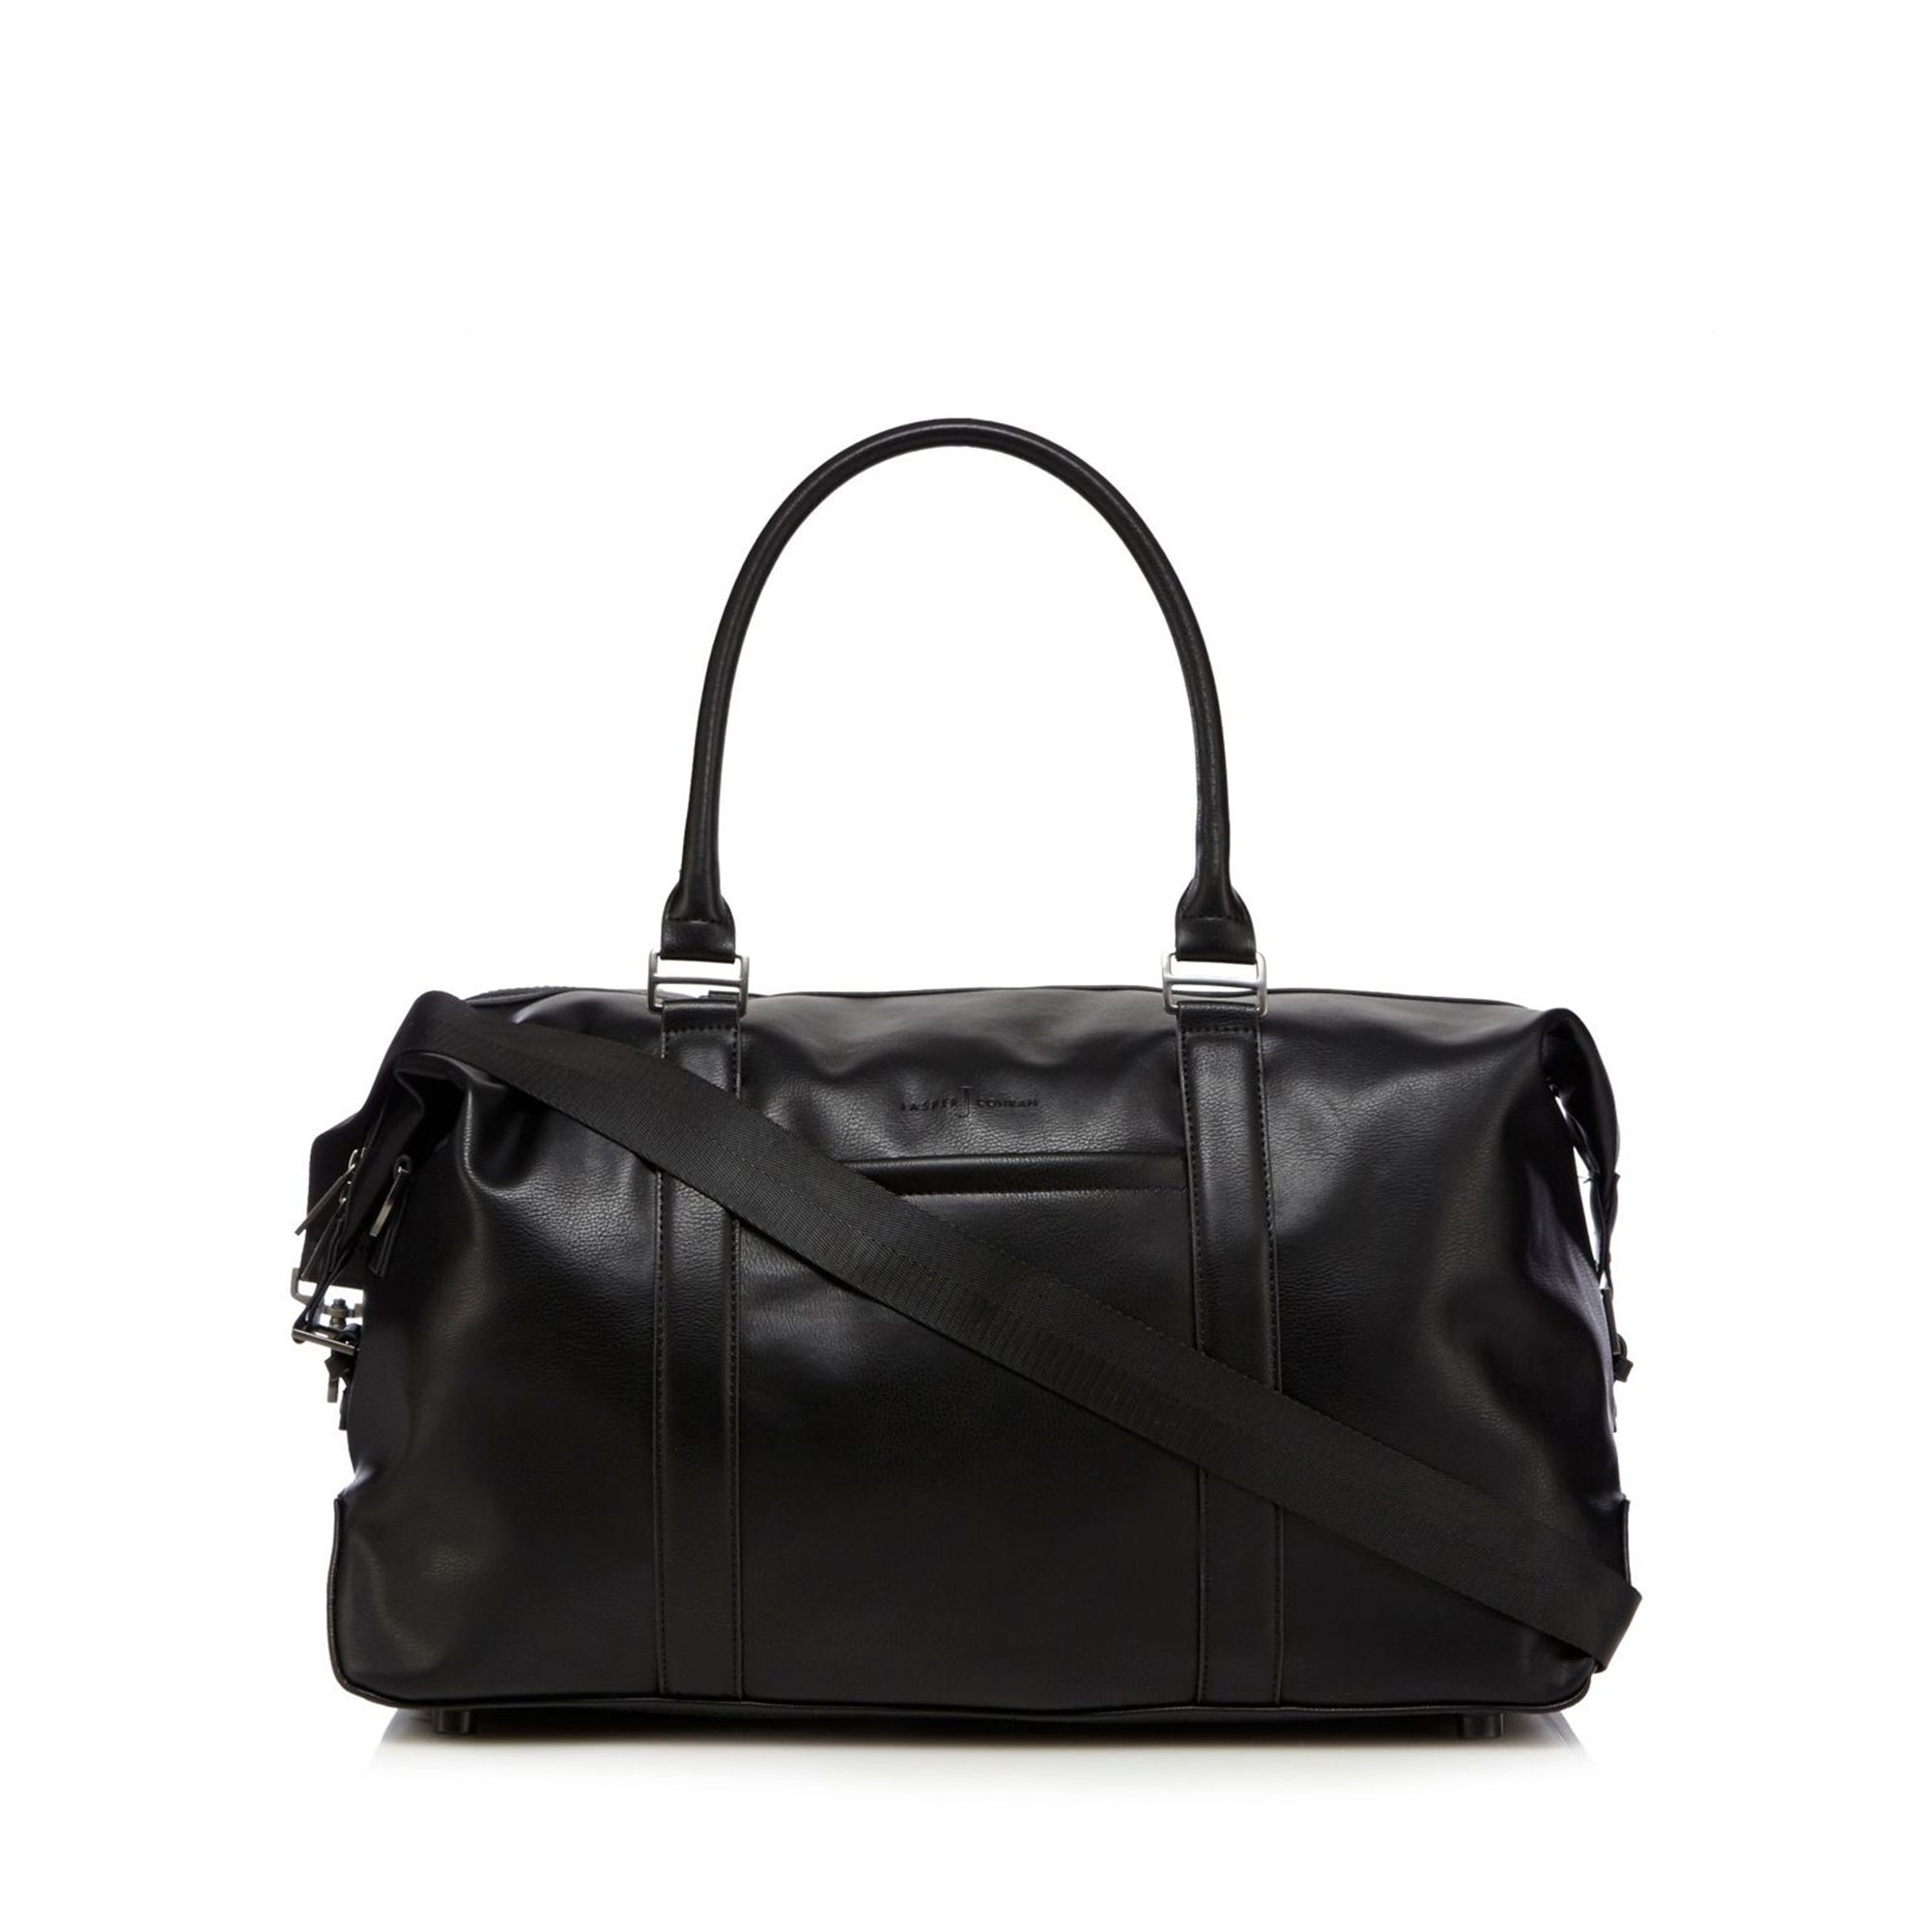 J By Jasper Conran Mens Black Large Holdall Bag From Debenhams | eBay